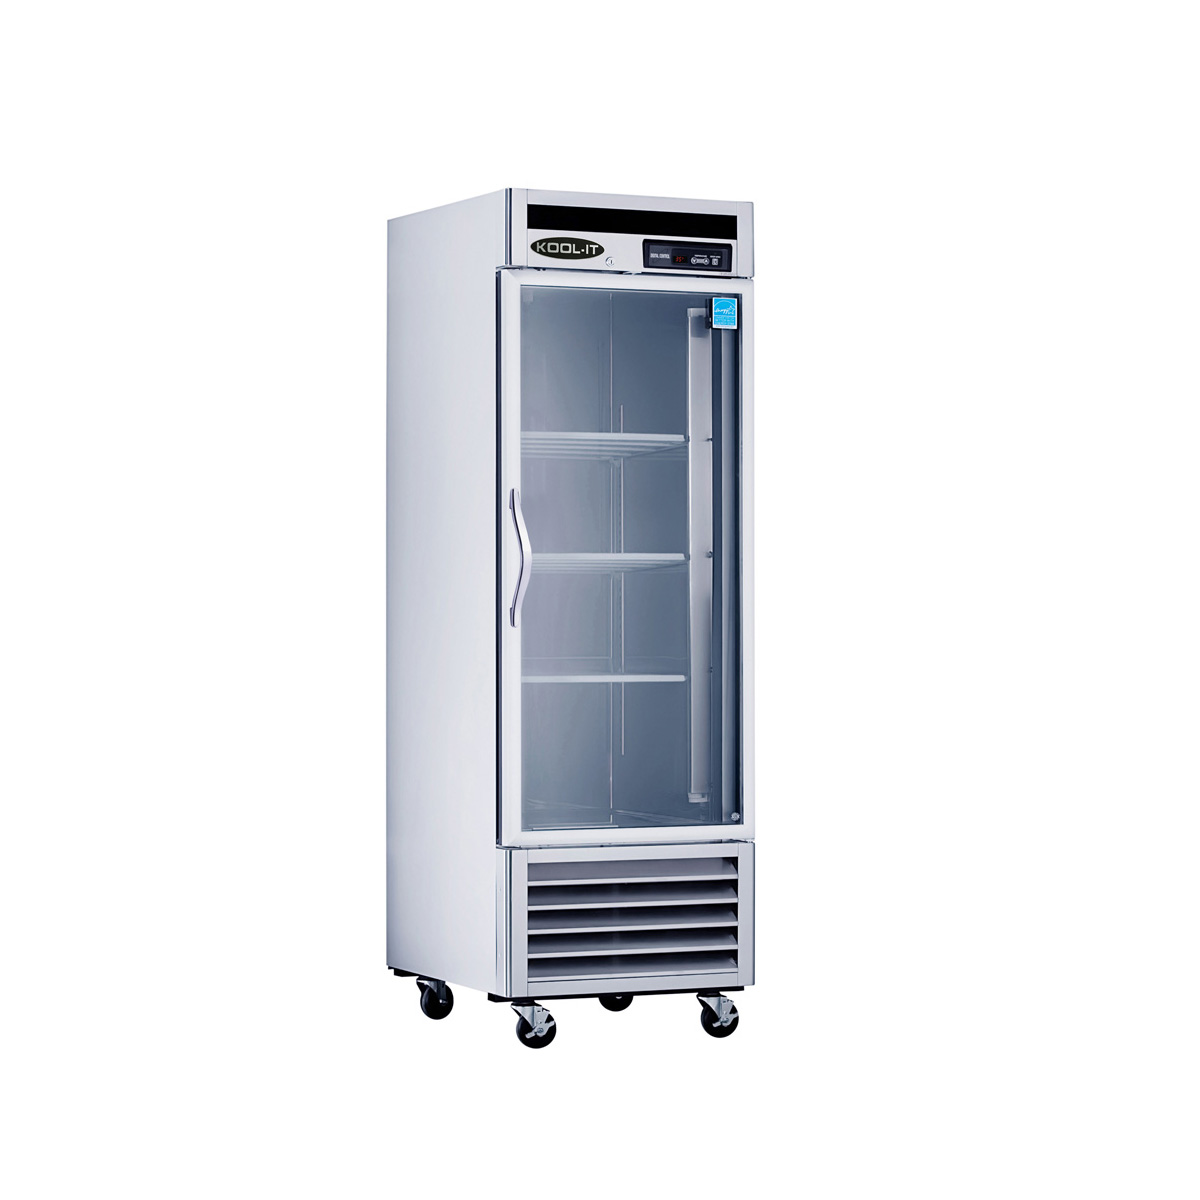 Kool-It KBSR-1G 26″ One Section Glass Door Reach-In Refrigerator, 19 cu. ft.